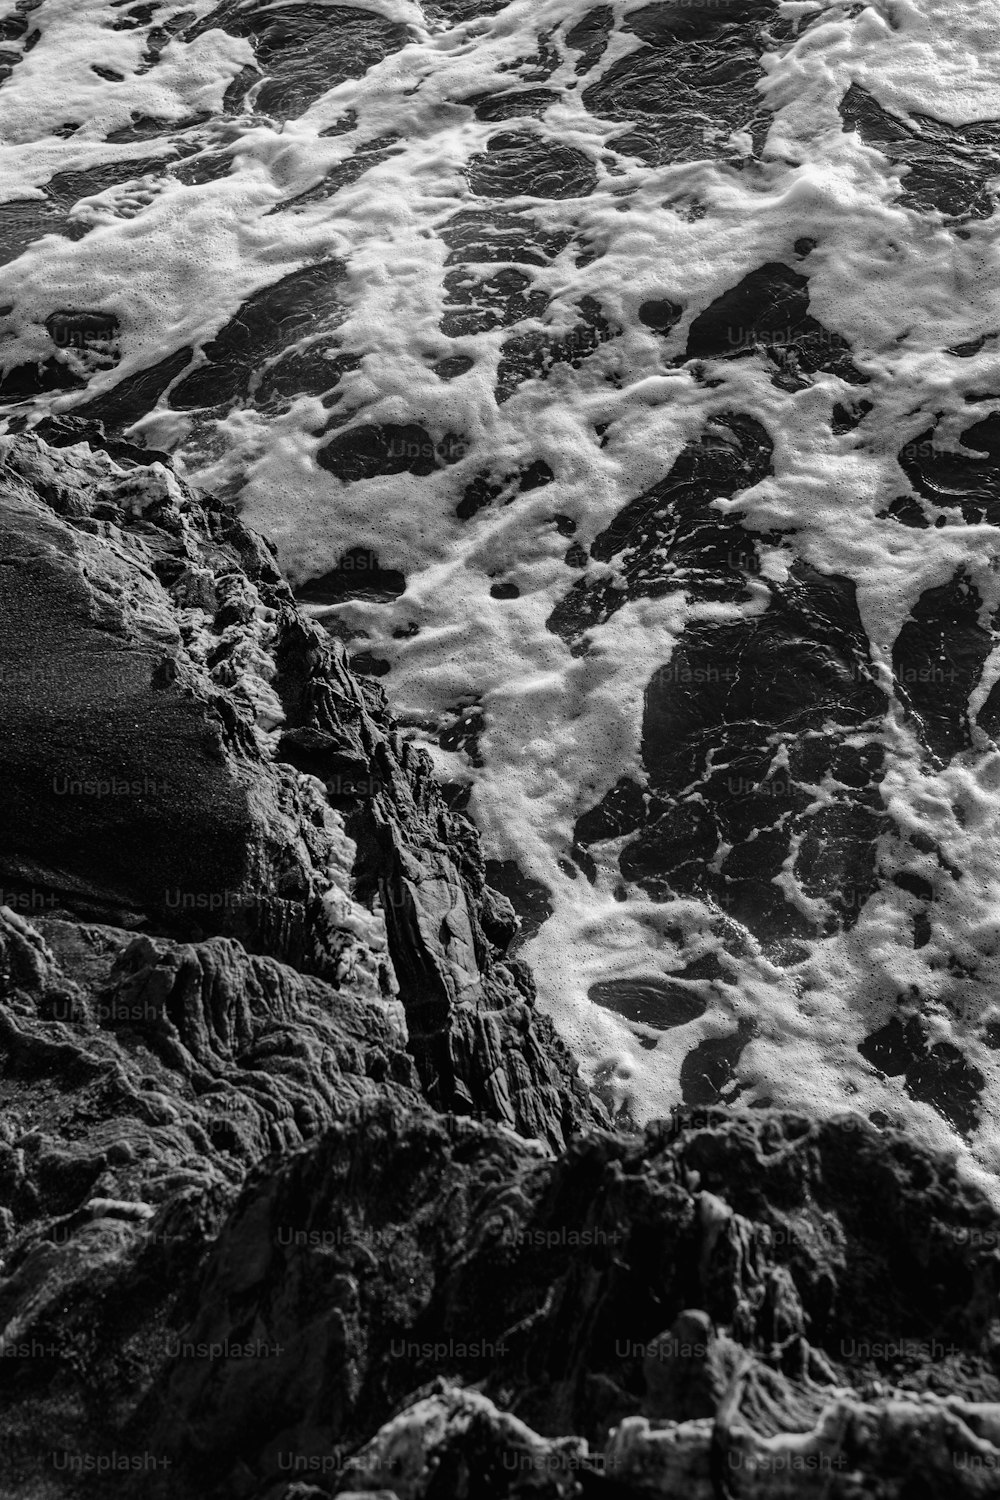 a black and white photo of waves crashing on rocks